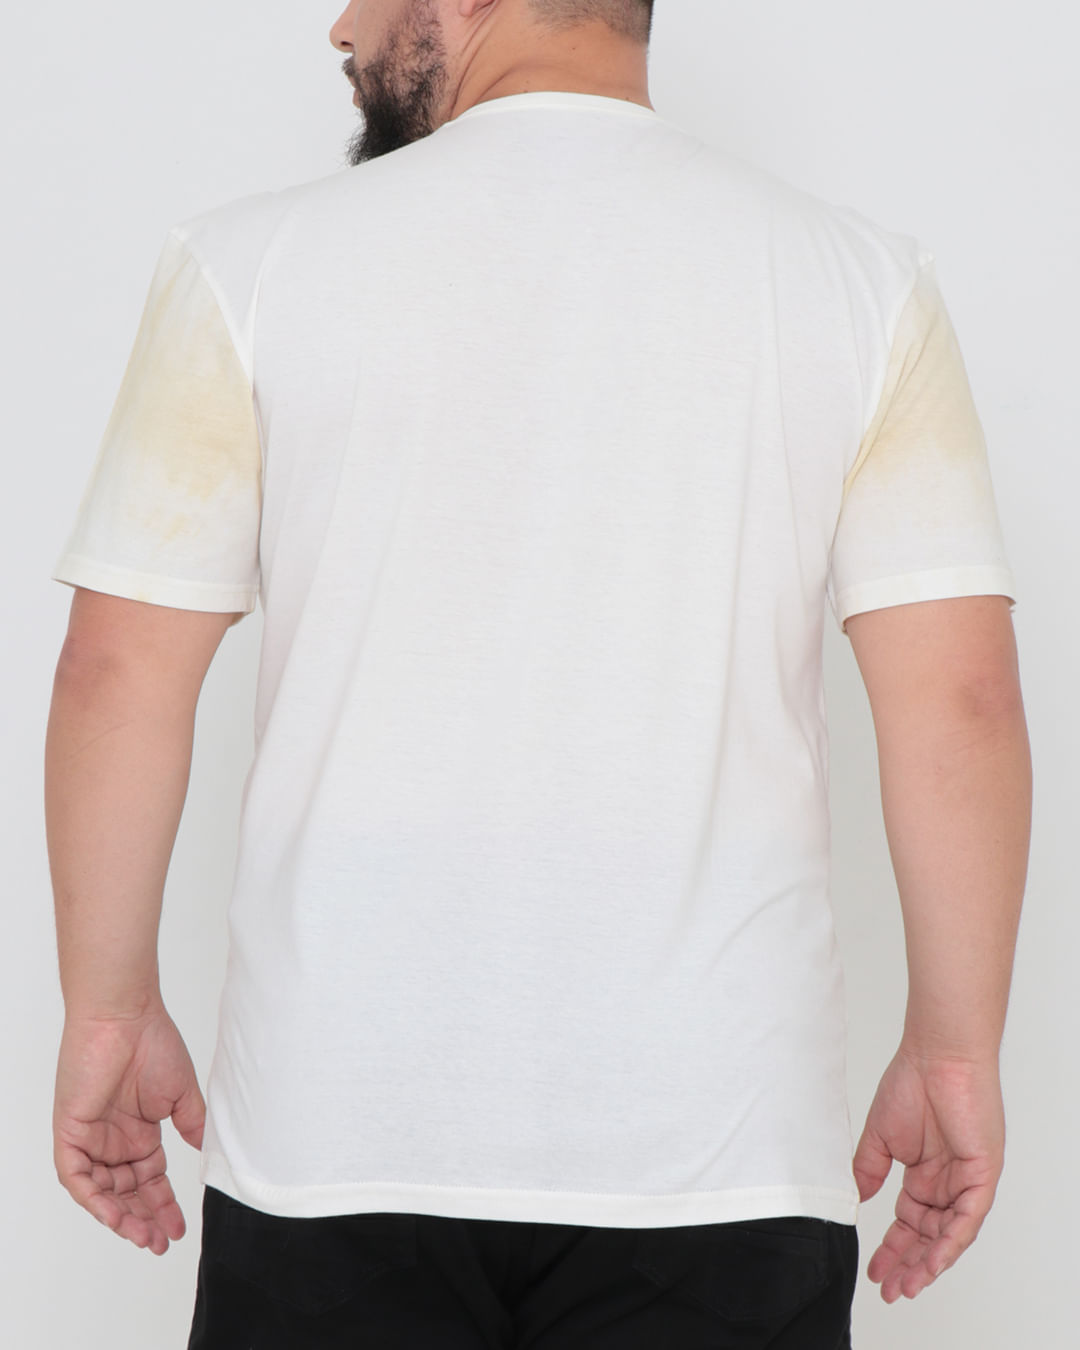 Camiseta-Plus-Size-Estampada-Urban-Tie-Dye-Bege-Claro